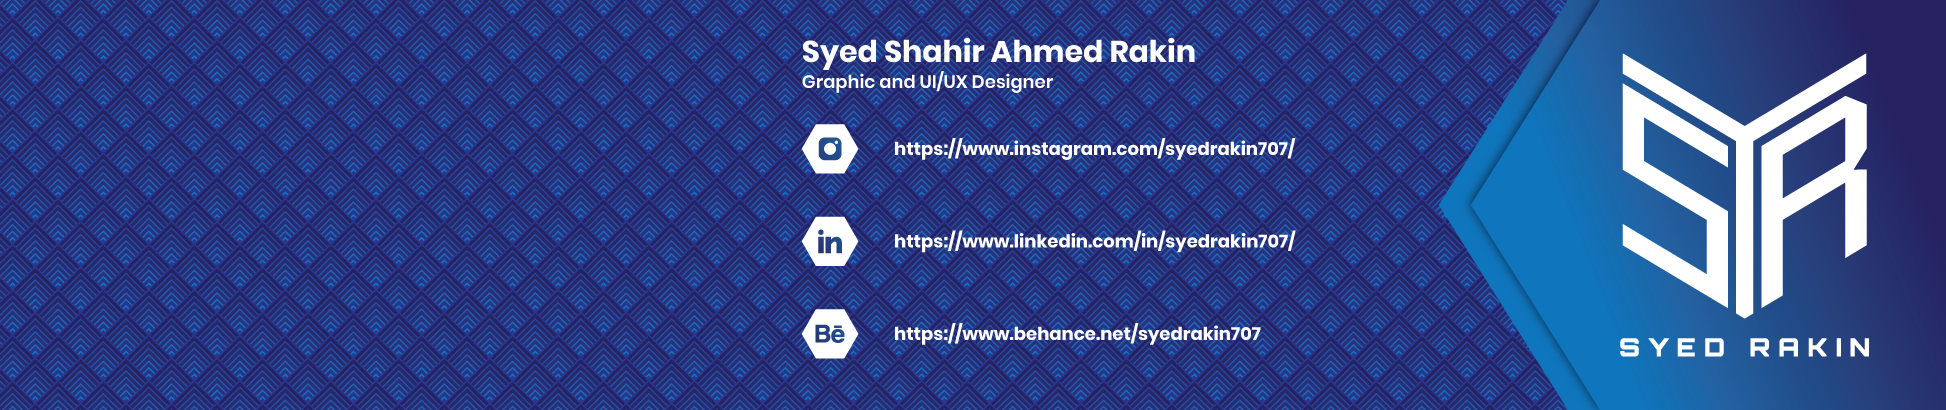 Syed Shahir Ahmed Rakin's profile banner